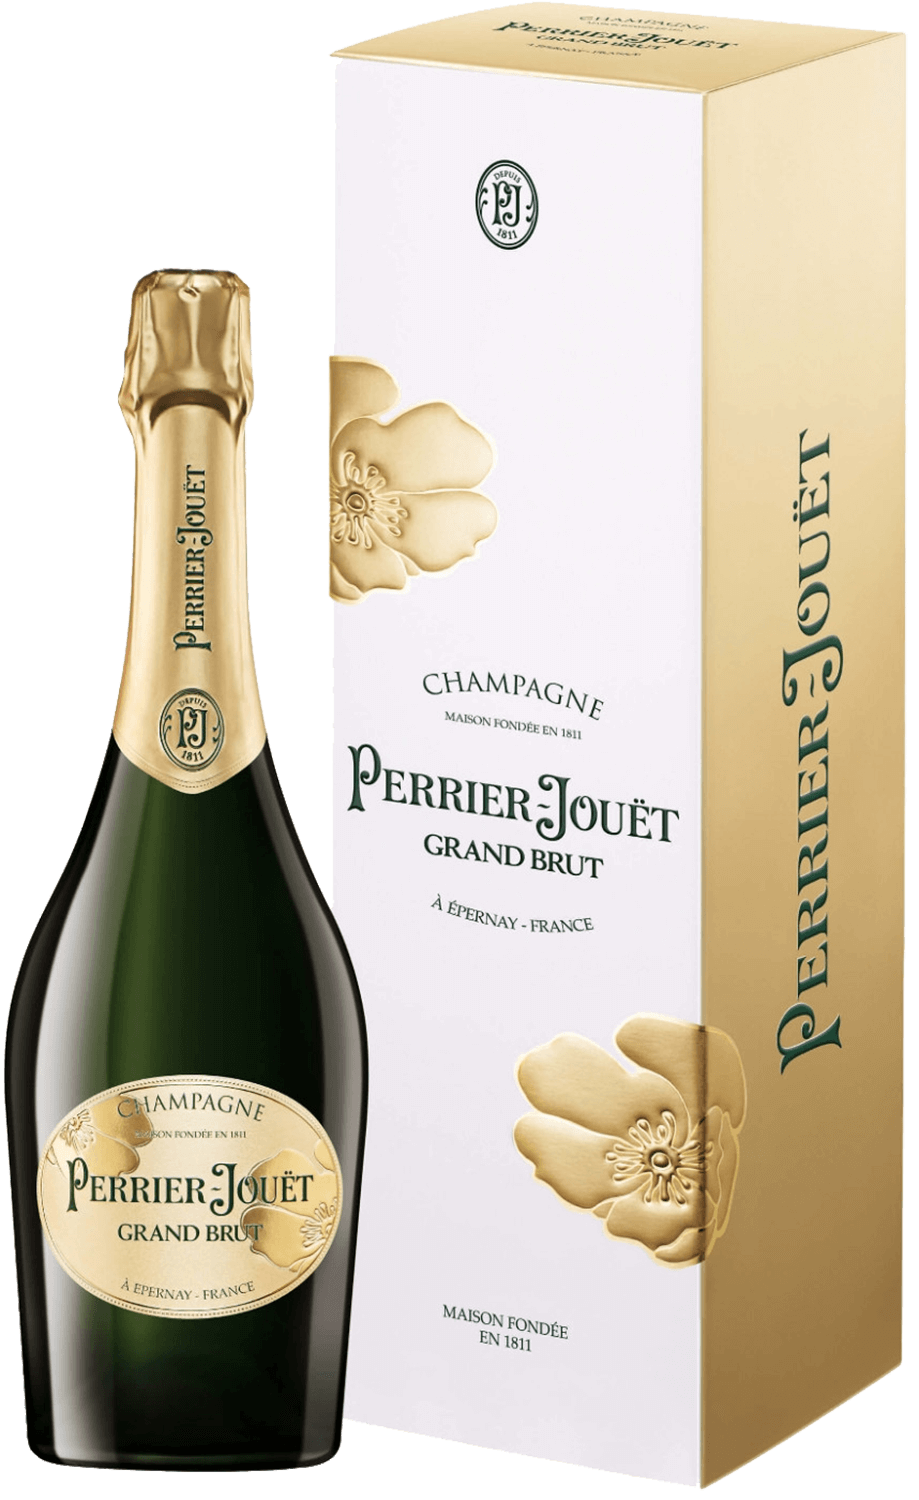 Perrier-Jouёt Grand Brut Champagne AOC (gift box) g h mumm grand cordon rose champagne aoc brut gift box